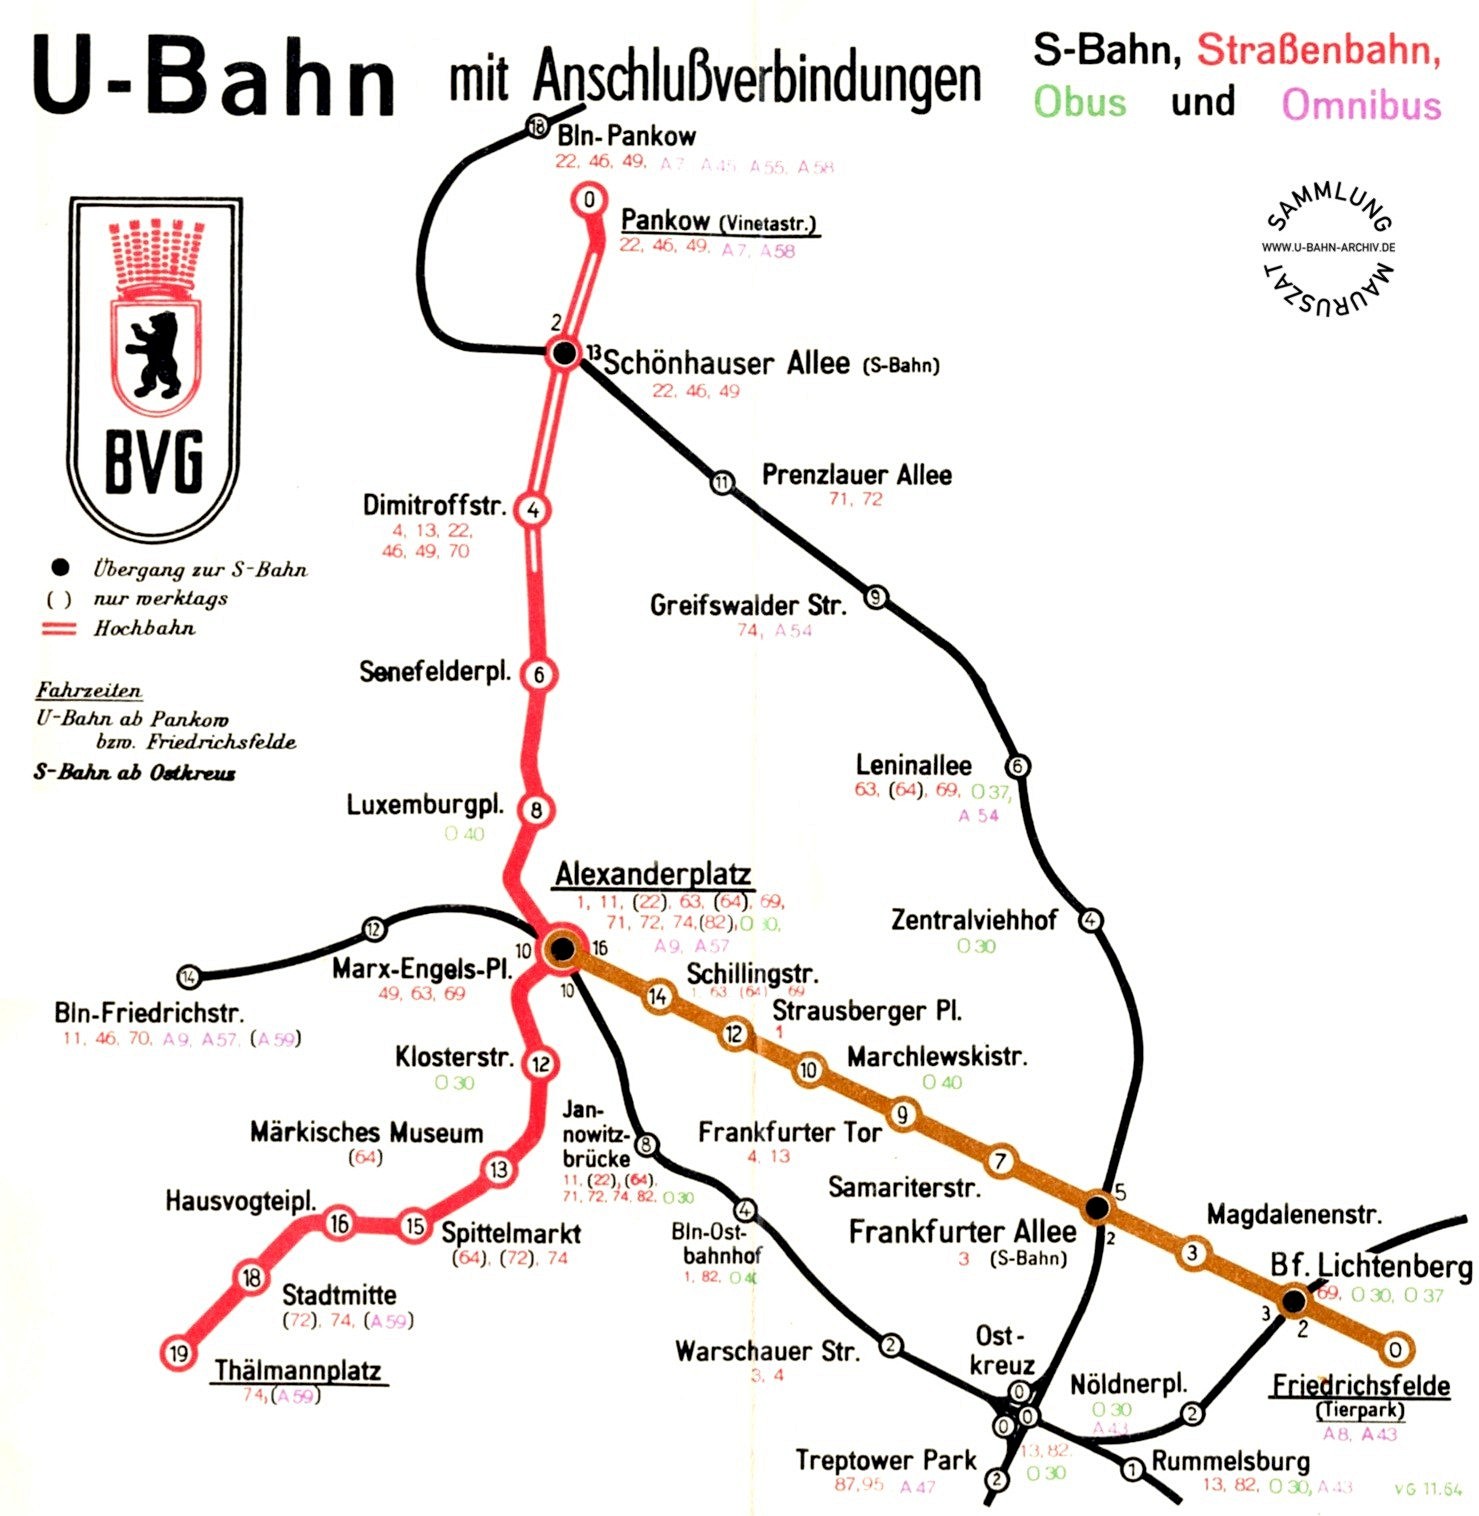 Das Berliner UBahnArchiv Netzspinnen